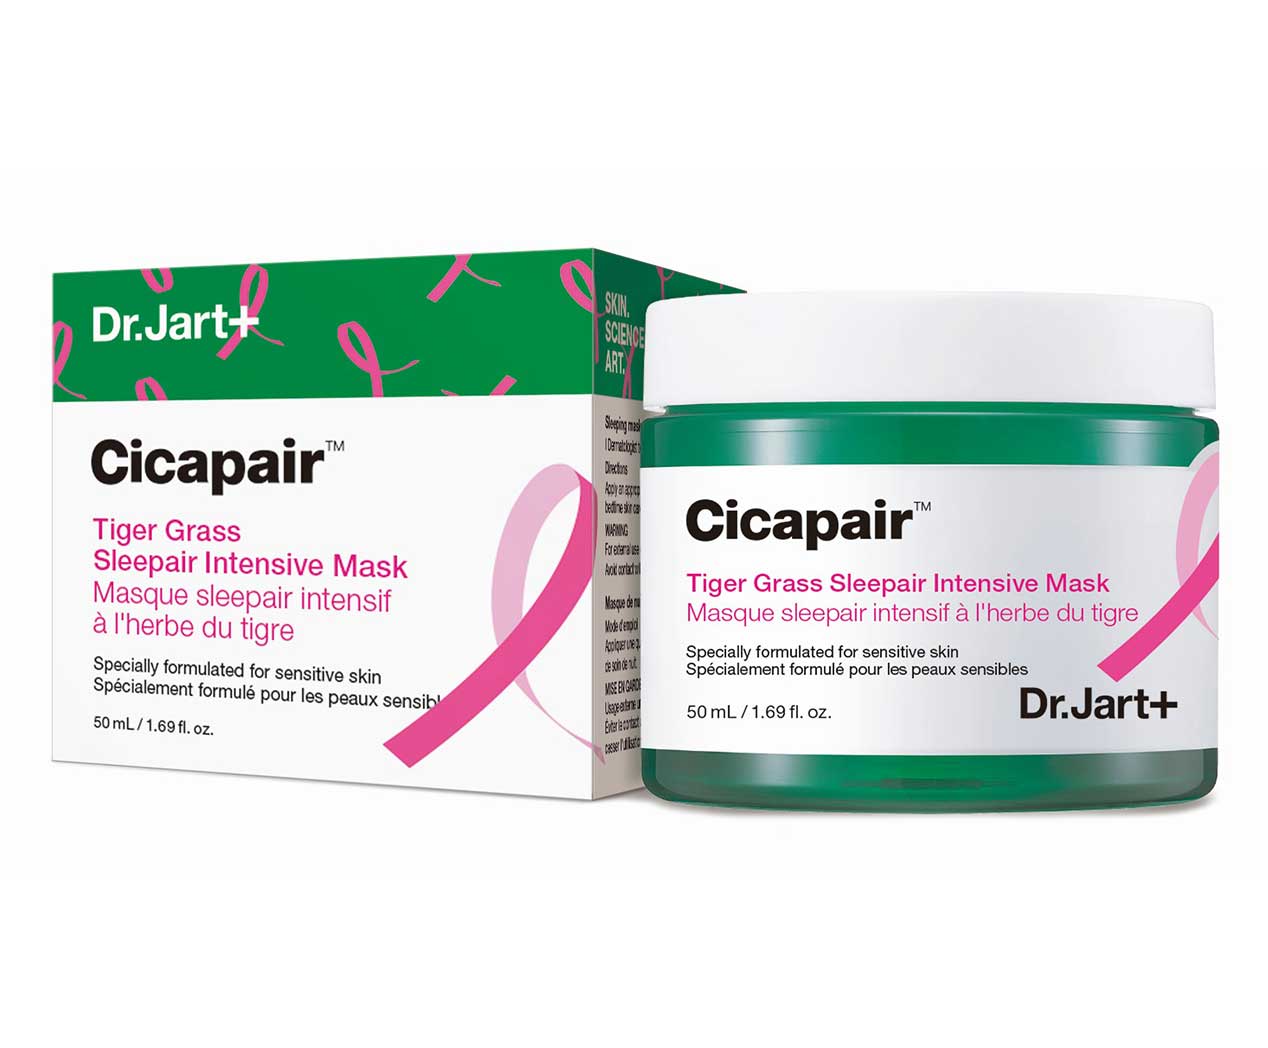 DR.JART+-Cicapair™-Tiger-Grass-Sleepair-Intensive-Mask.jpg